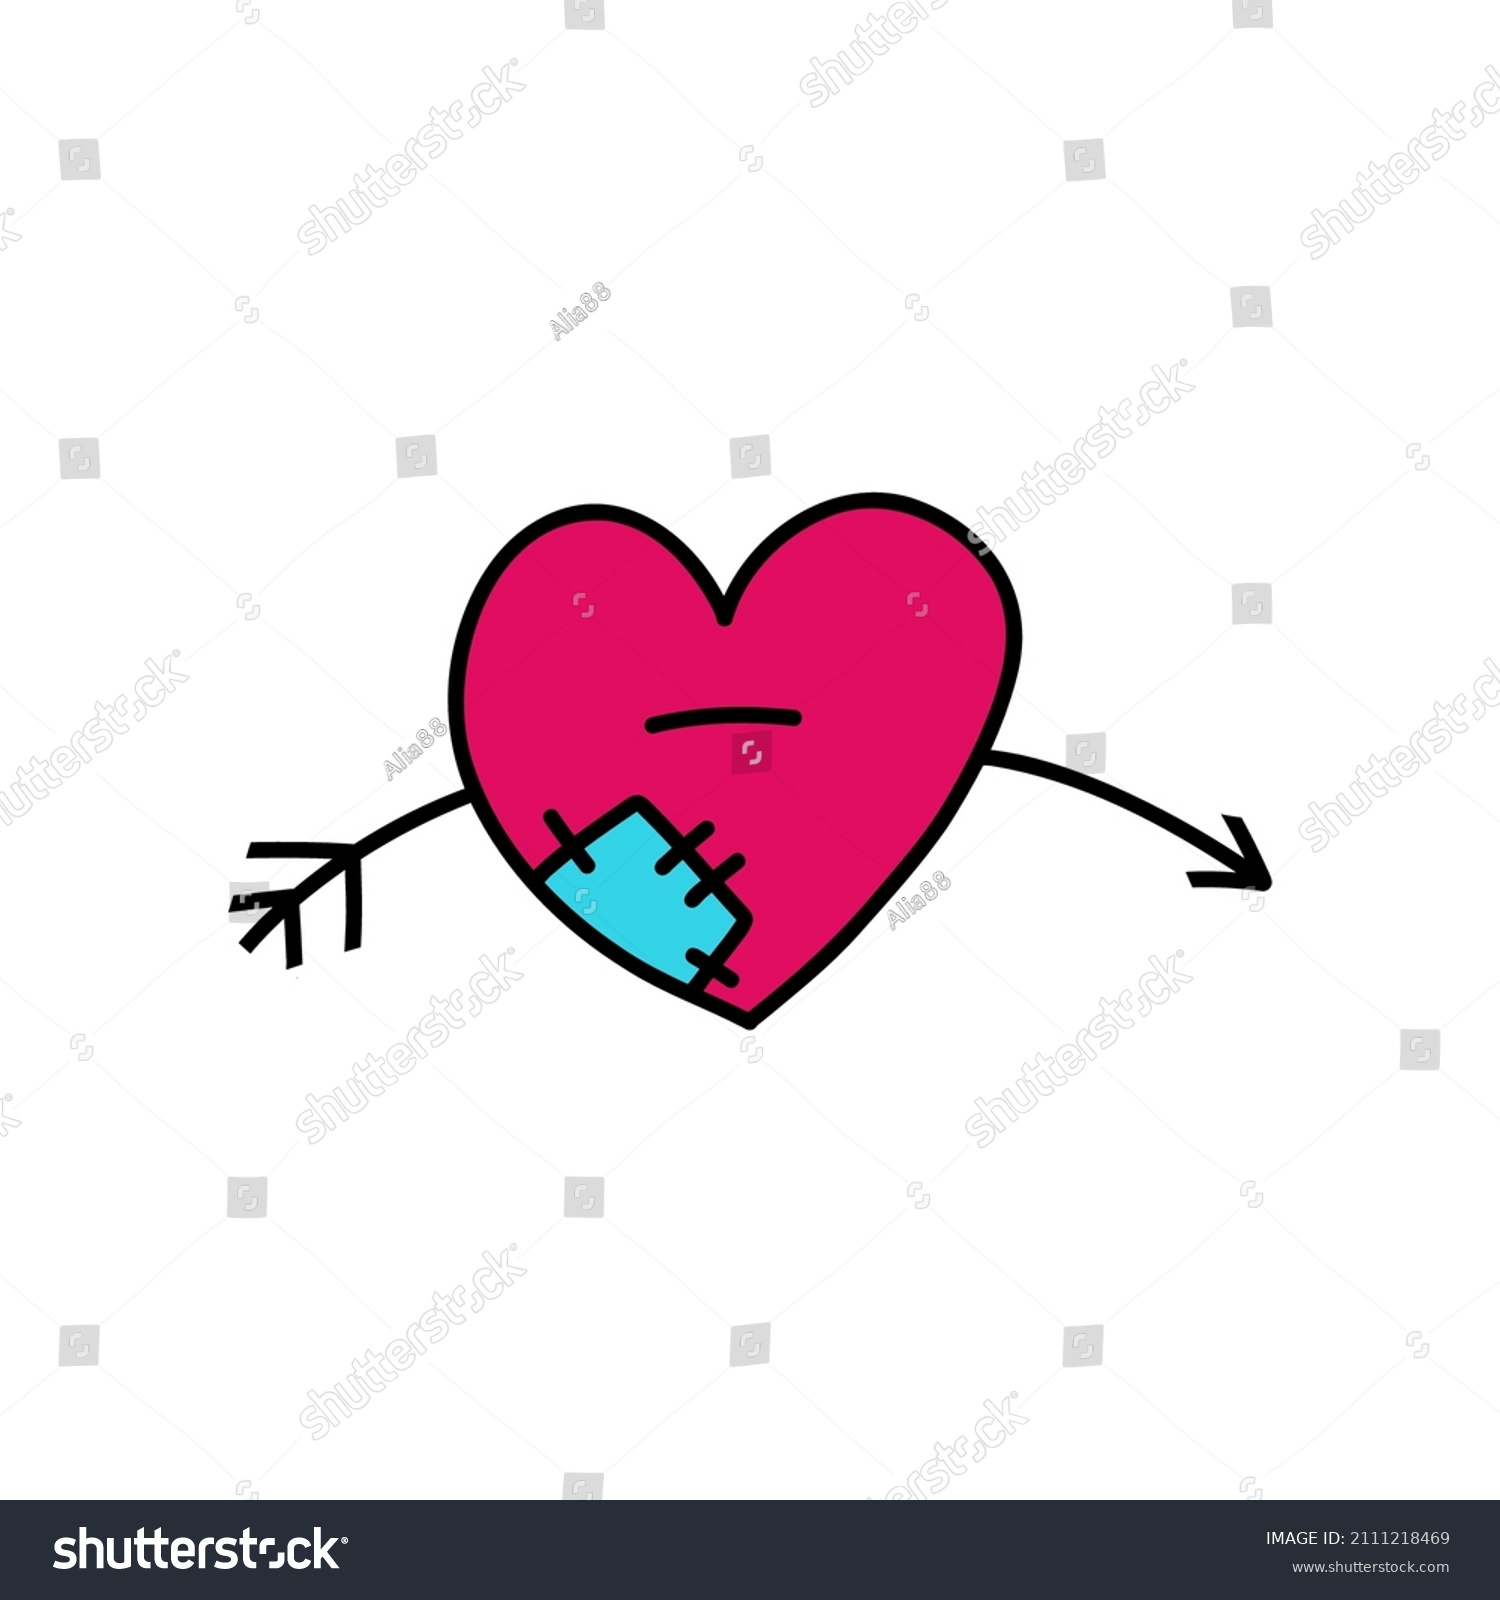 SVG of Heart broken icon for celebration design. Cartoon style. Red heart. svg